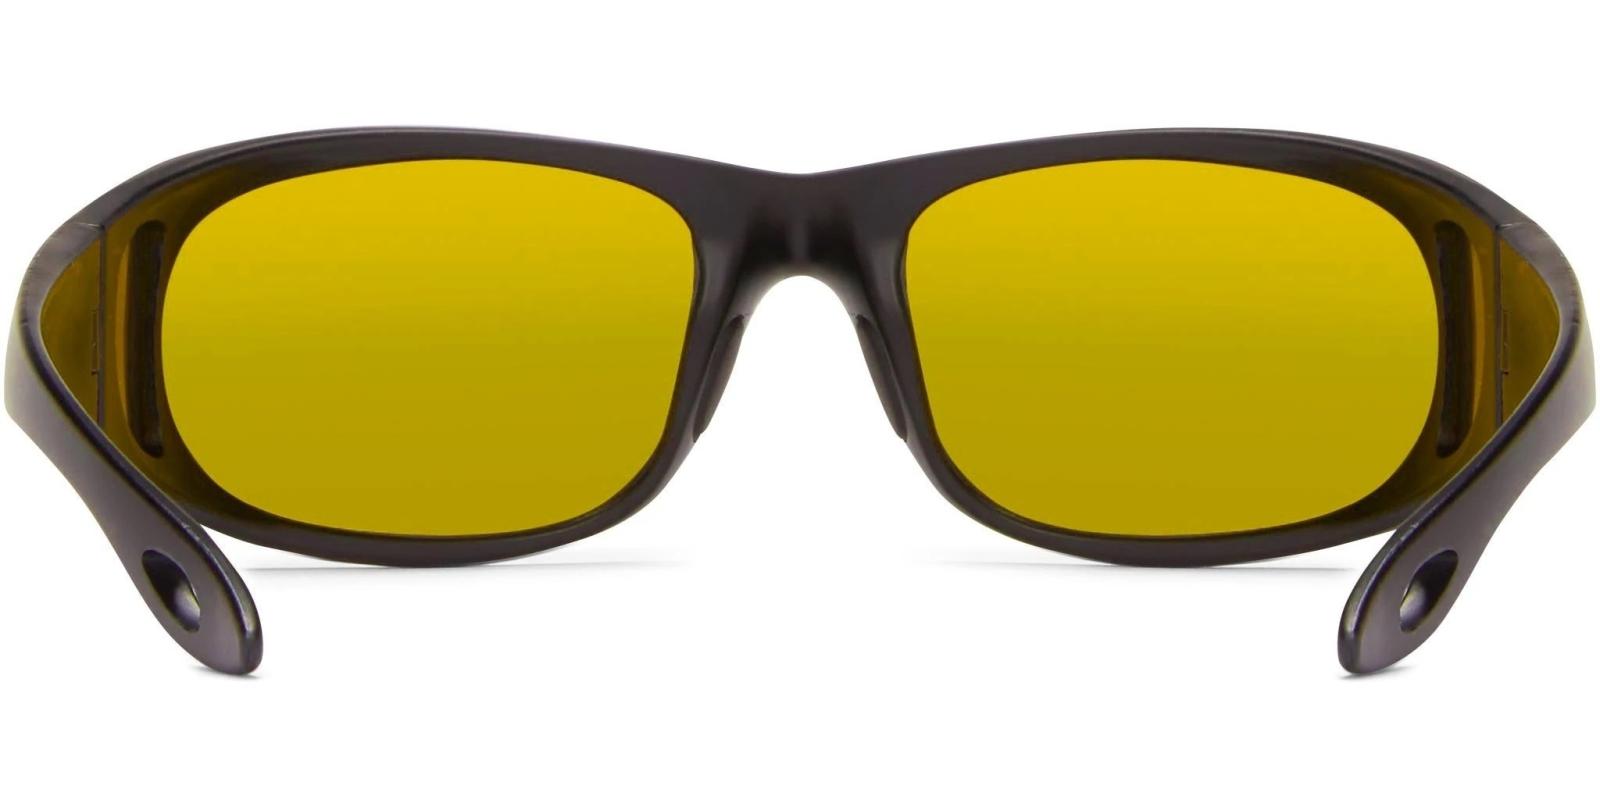 icu Eyewear Grander Sunglasses